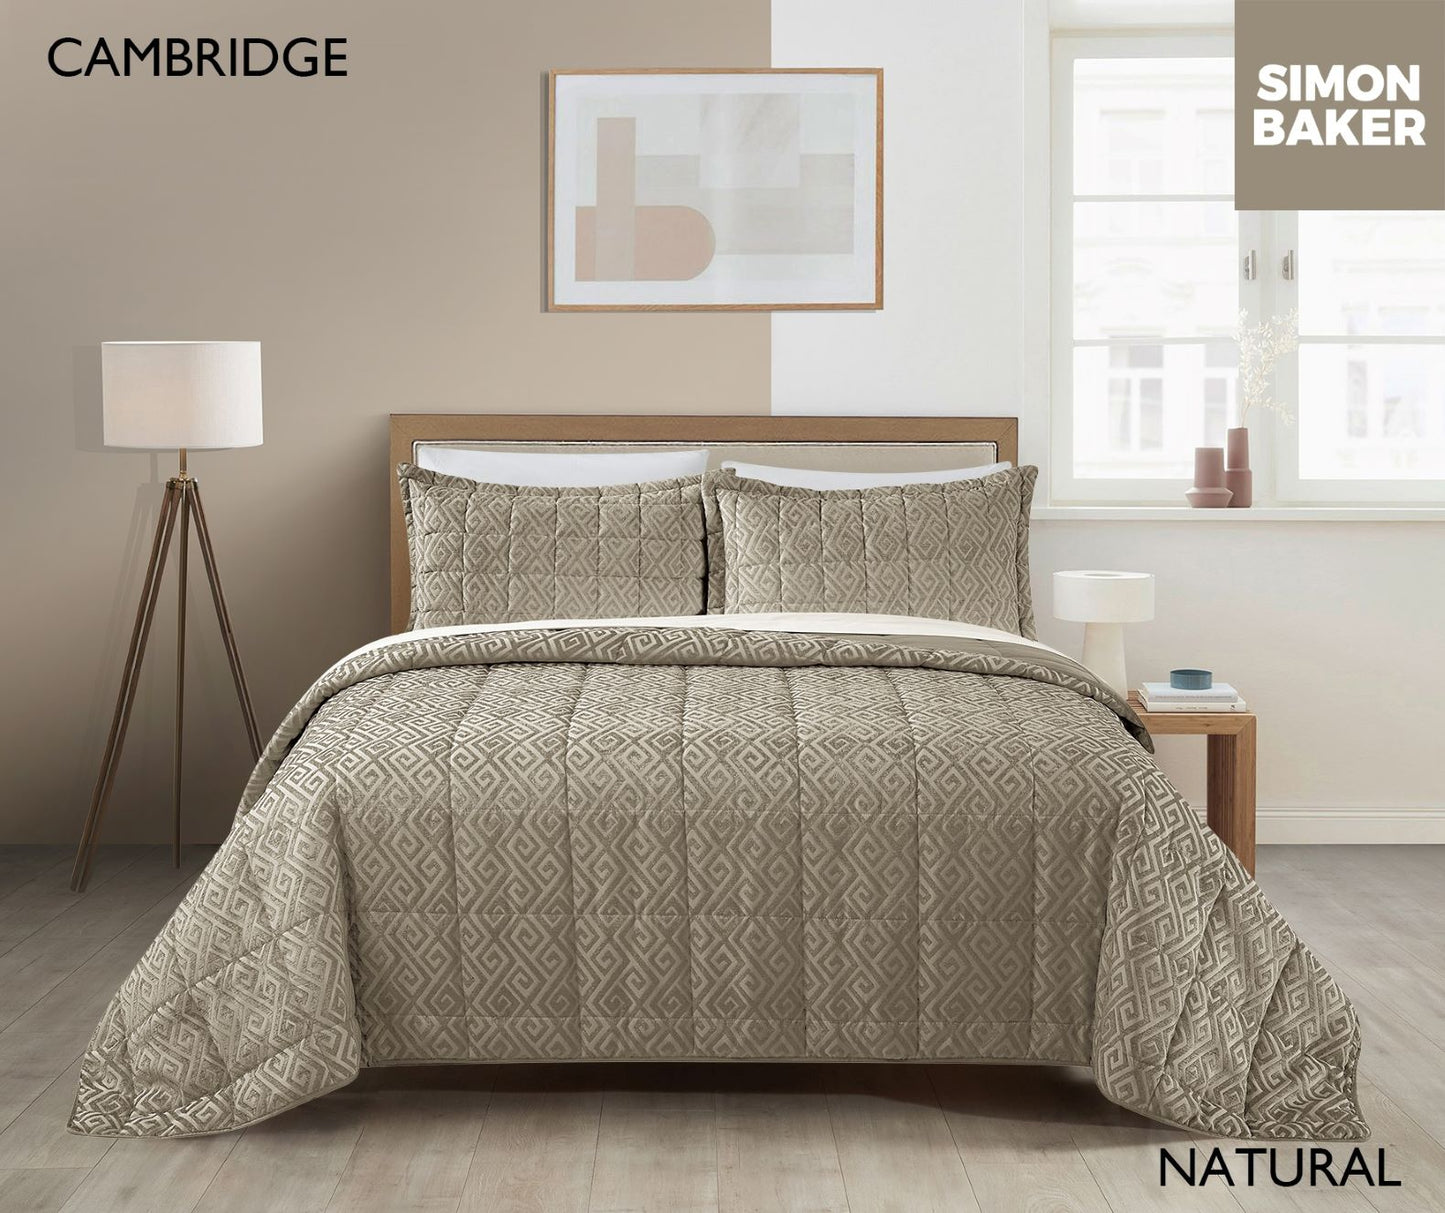 Simon Baker | Chenille Jacquard Comforter Cambridge - Natural (Various sizes)